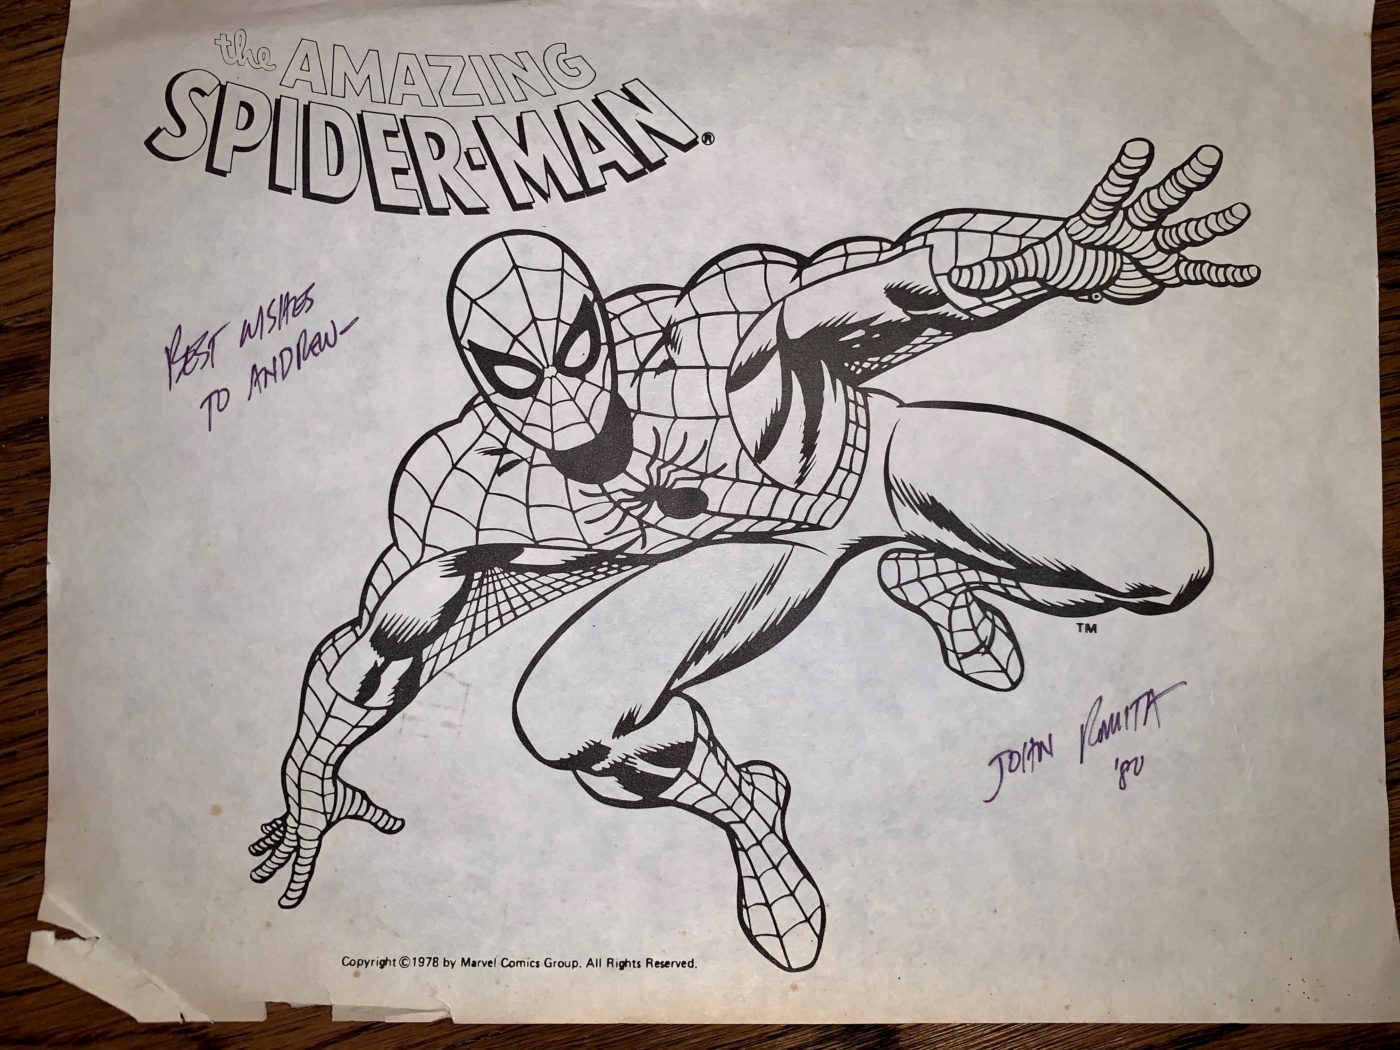 Spiderman Illustration